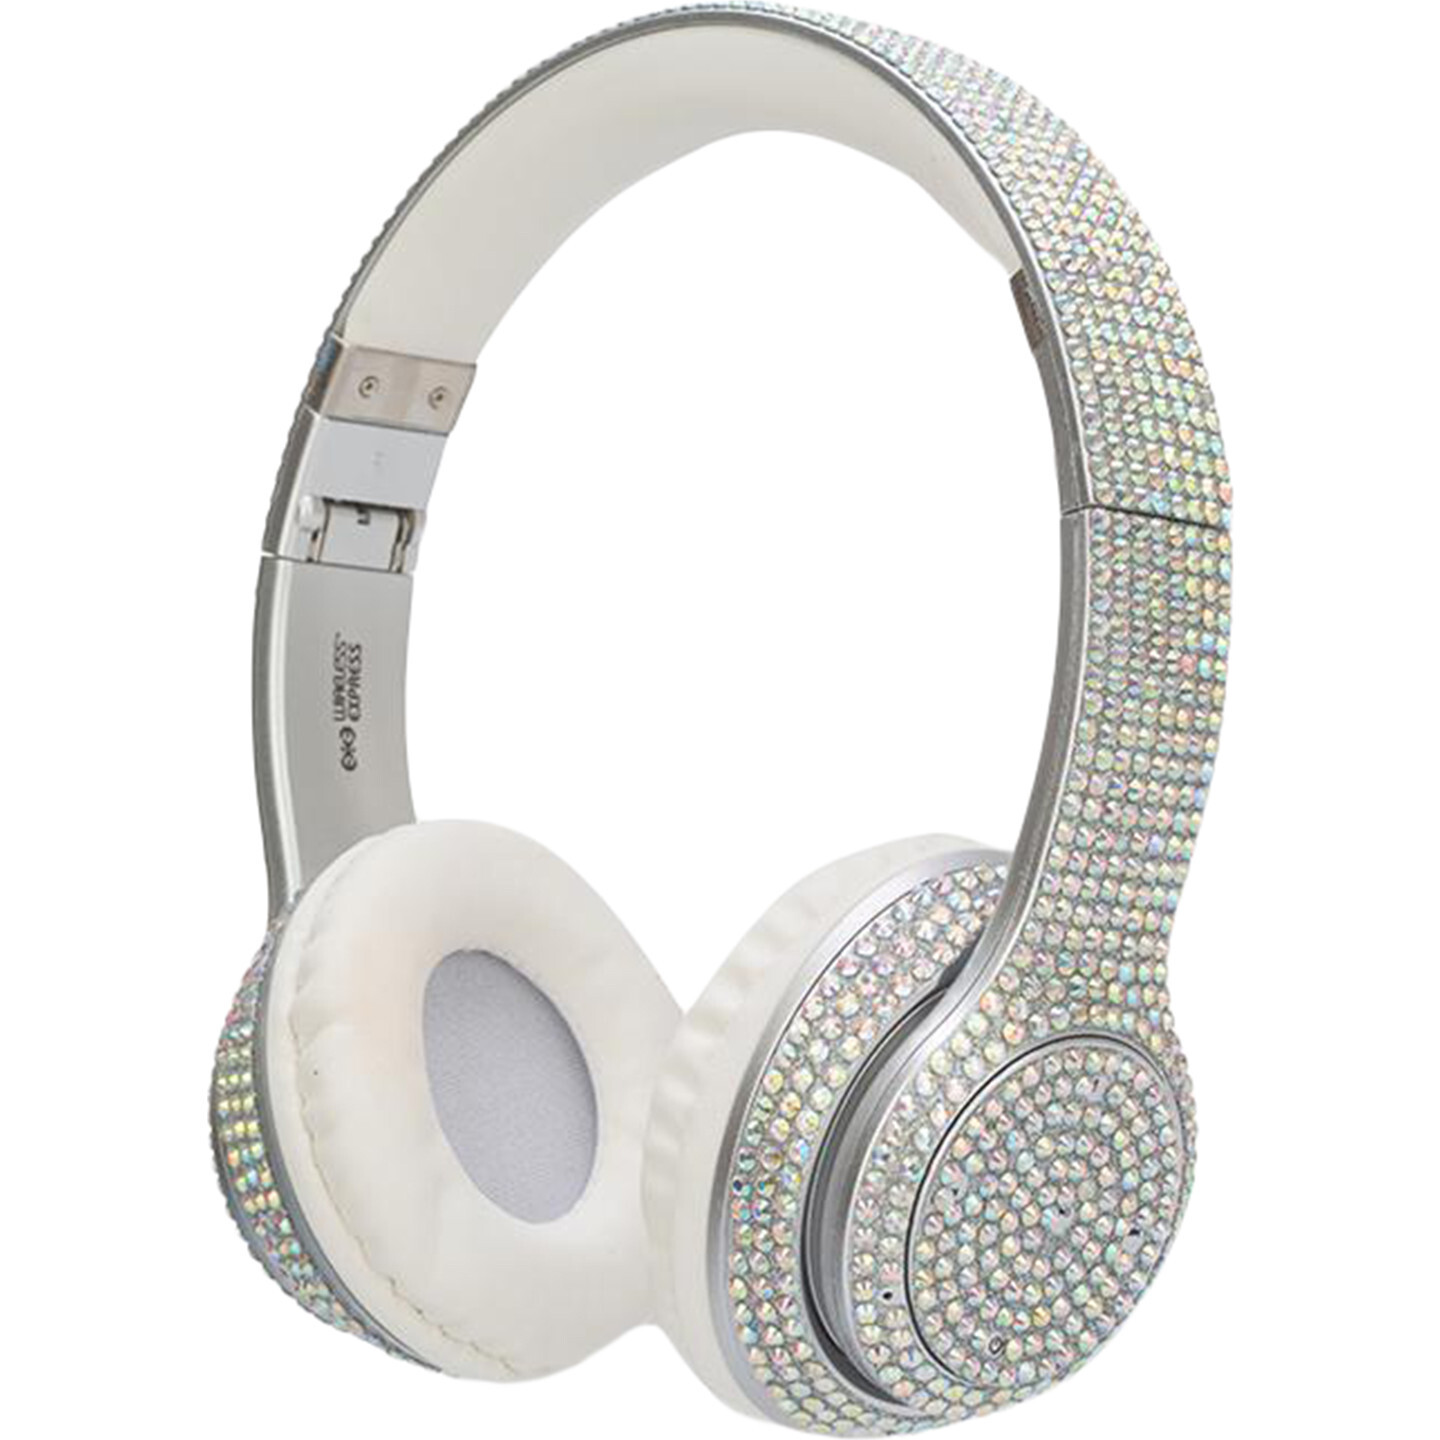 Rhinestone studded white and silver headphones.